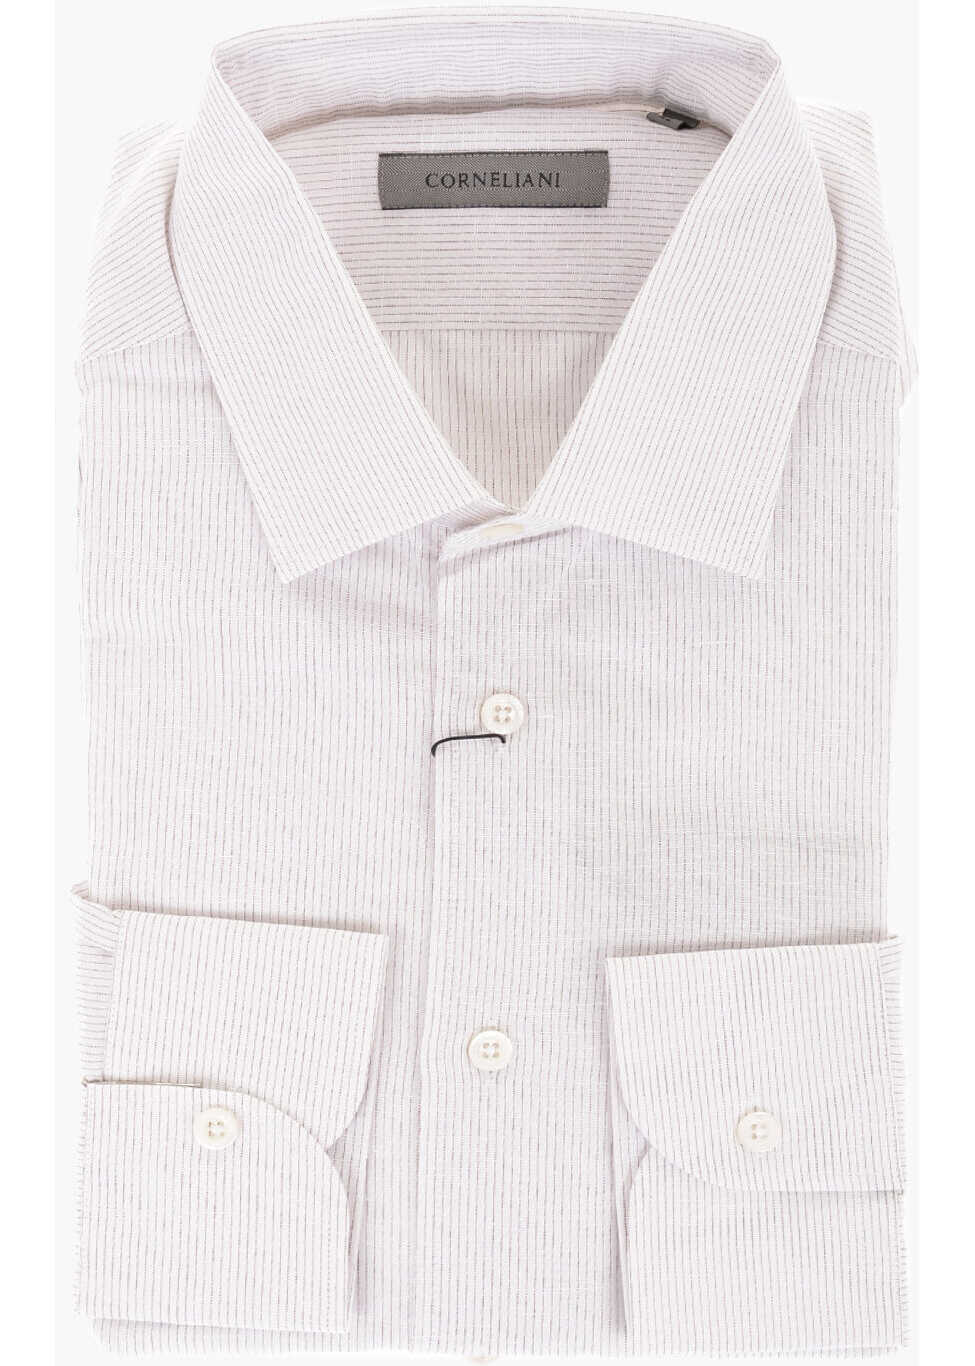 CORNELIANI Pinstriped Linen Blend Shirt White